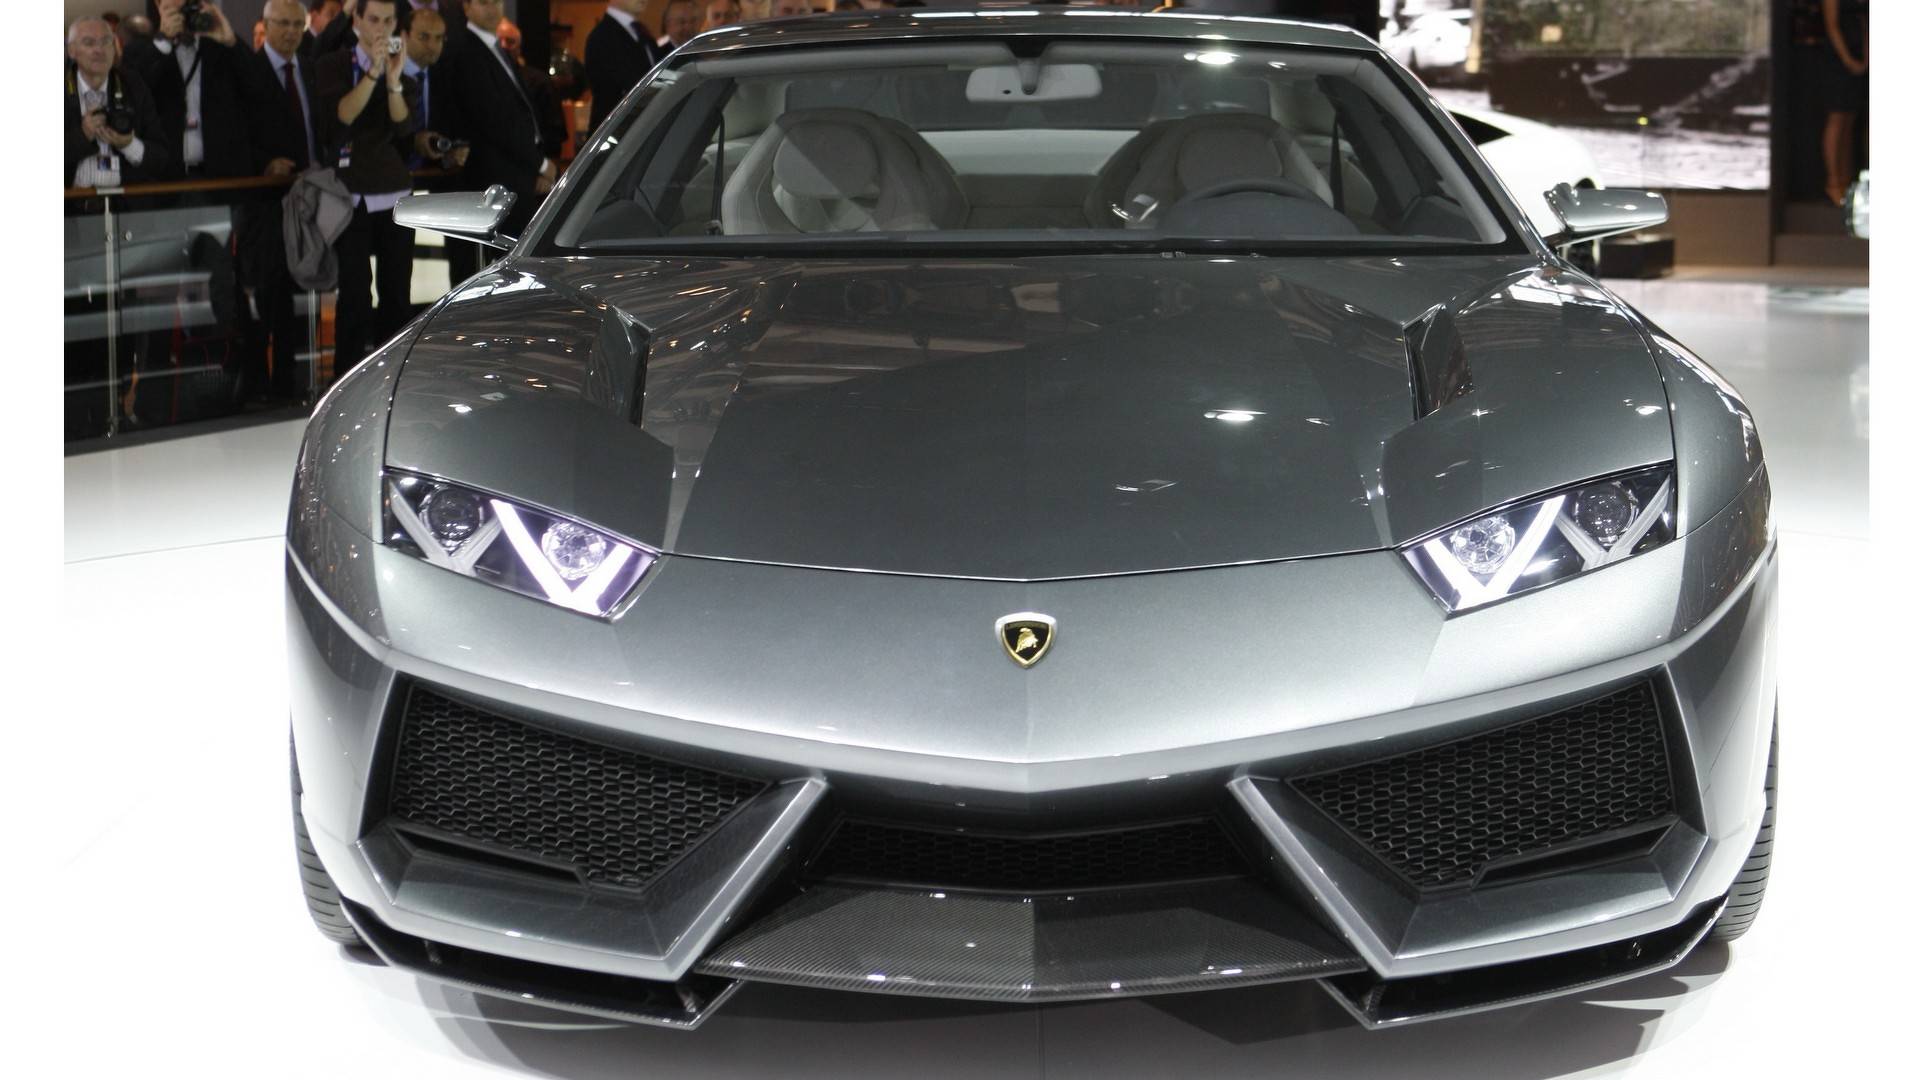 Will Lamborghini Four-Door Sedan Be Embodied? - Car news ...